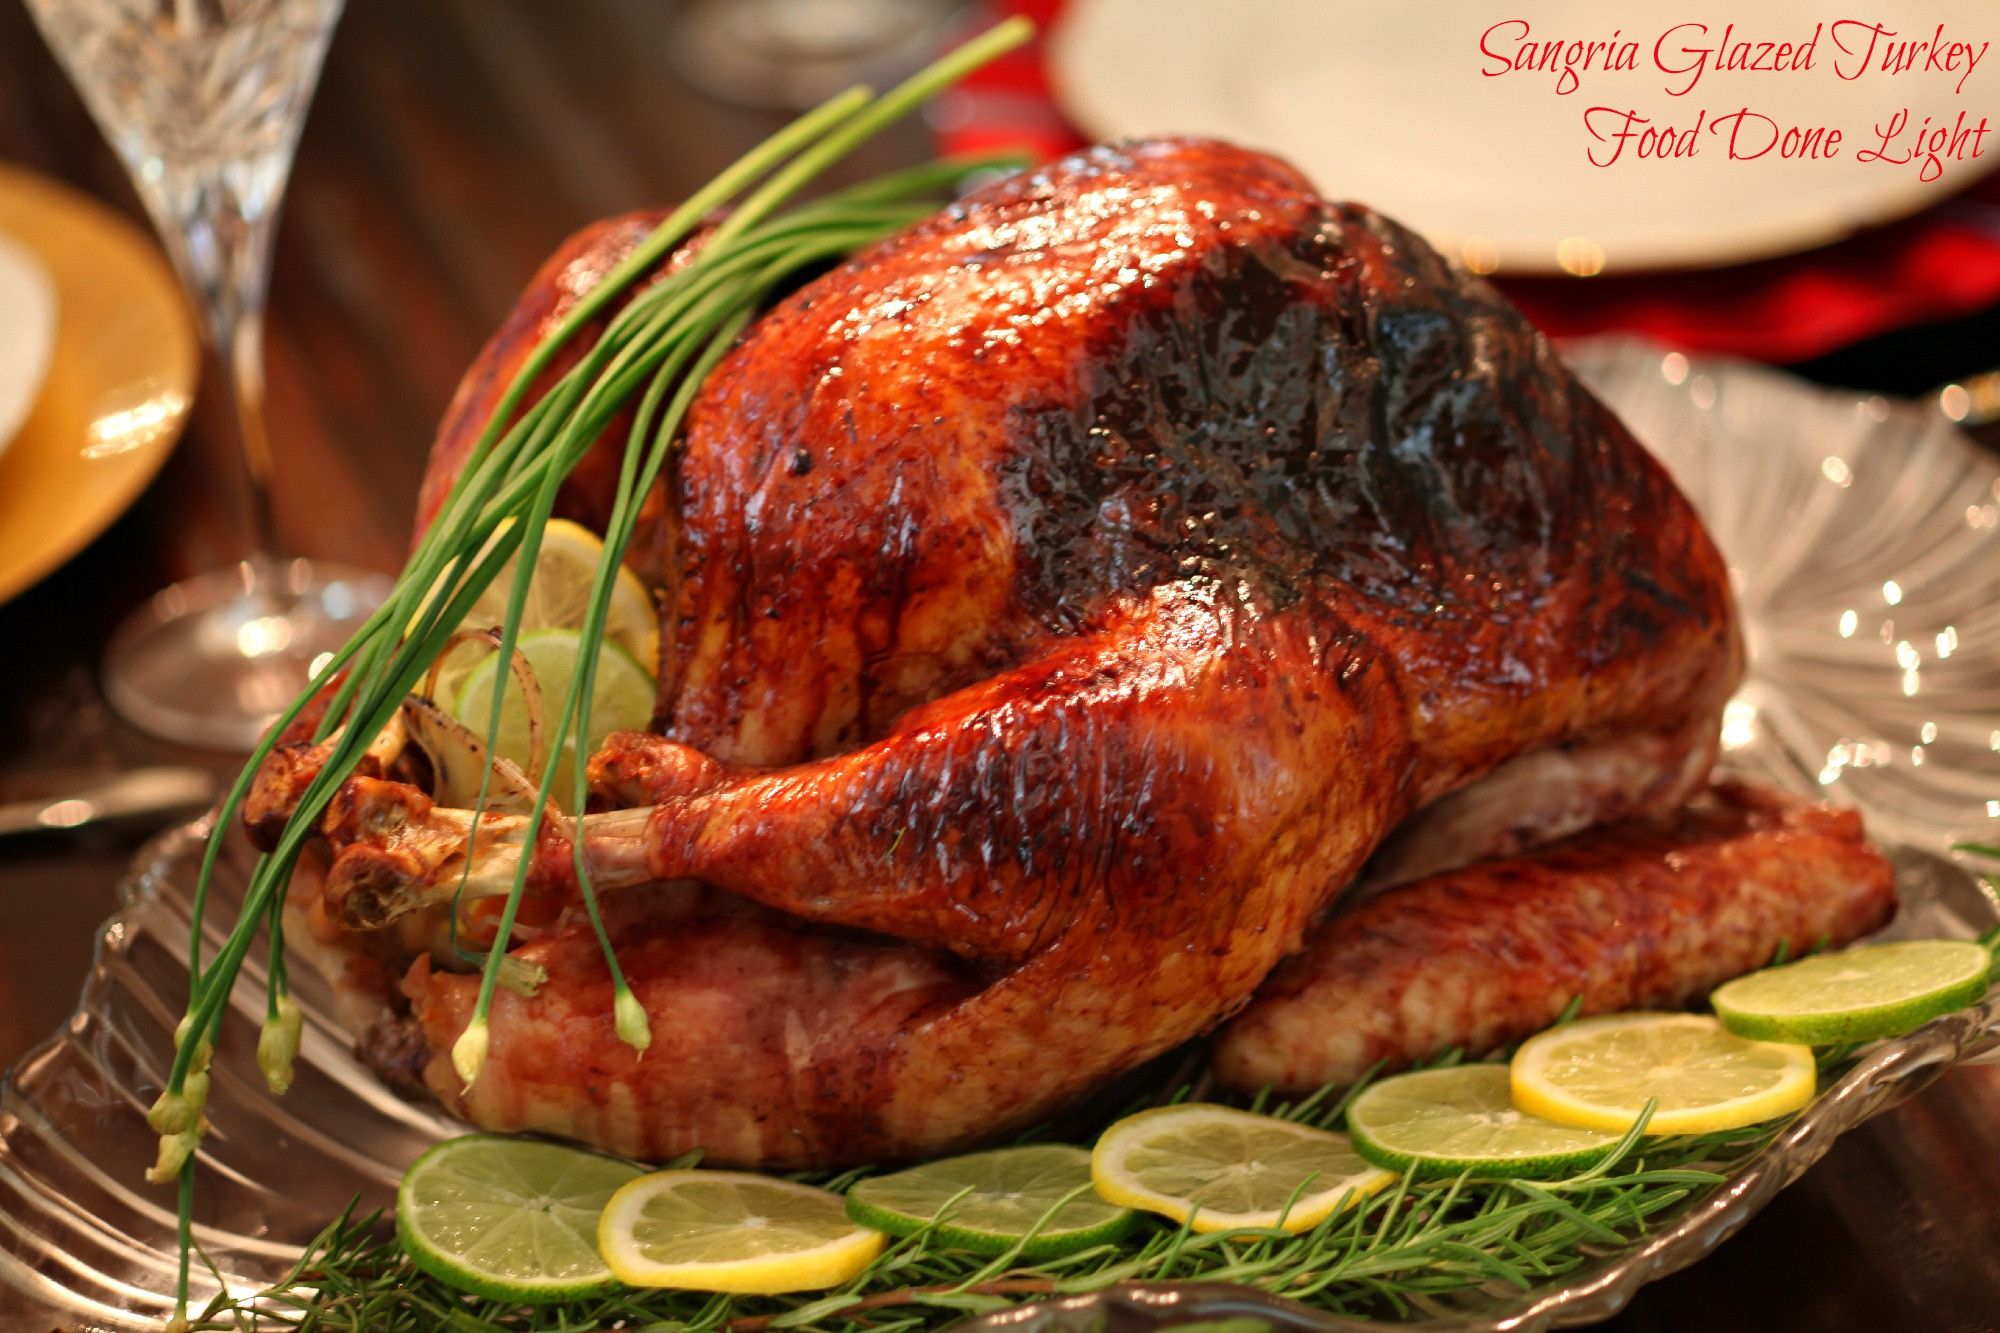 Prepared Thanksgiving Dinners 2019
 Sangria Glazed Turkey Food Done Light